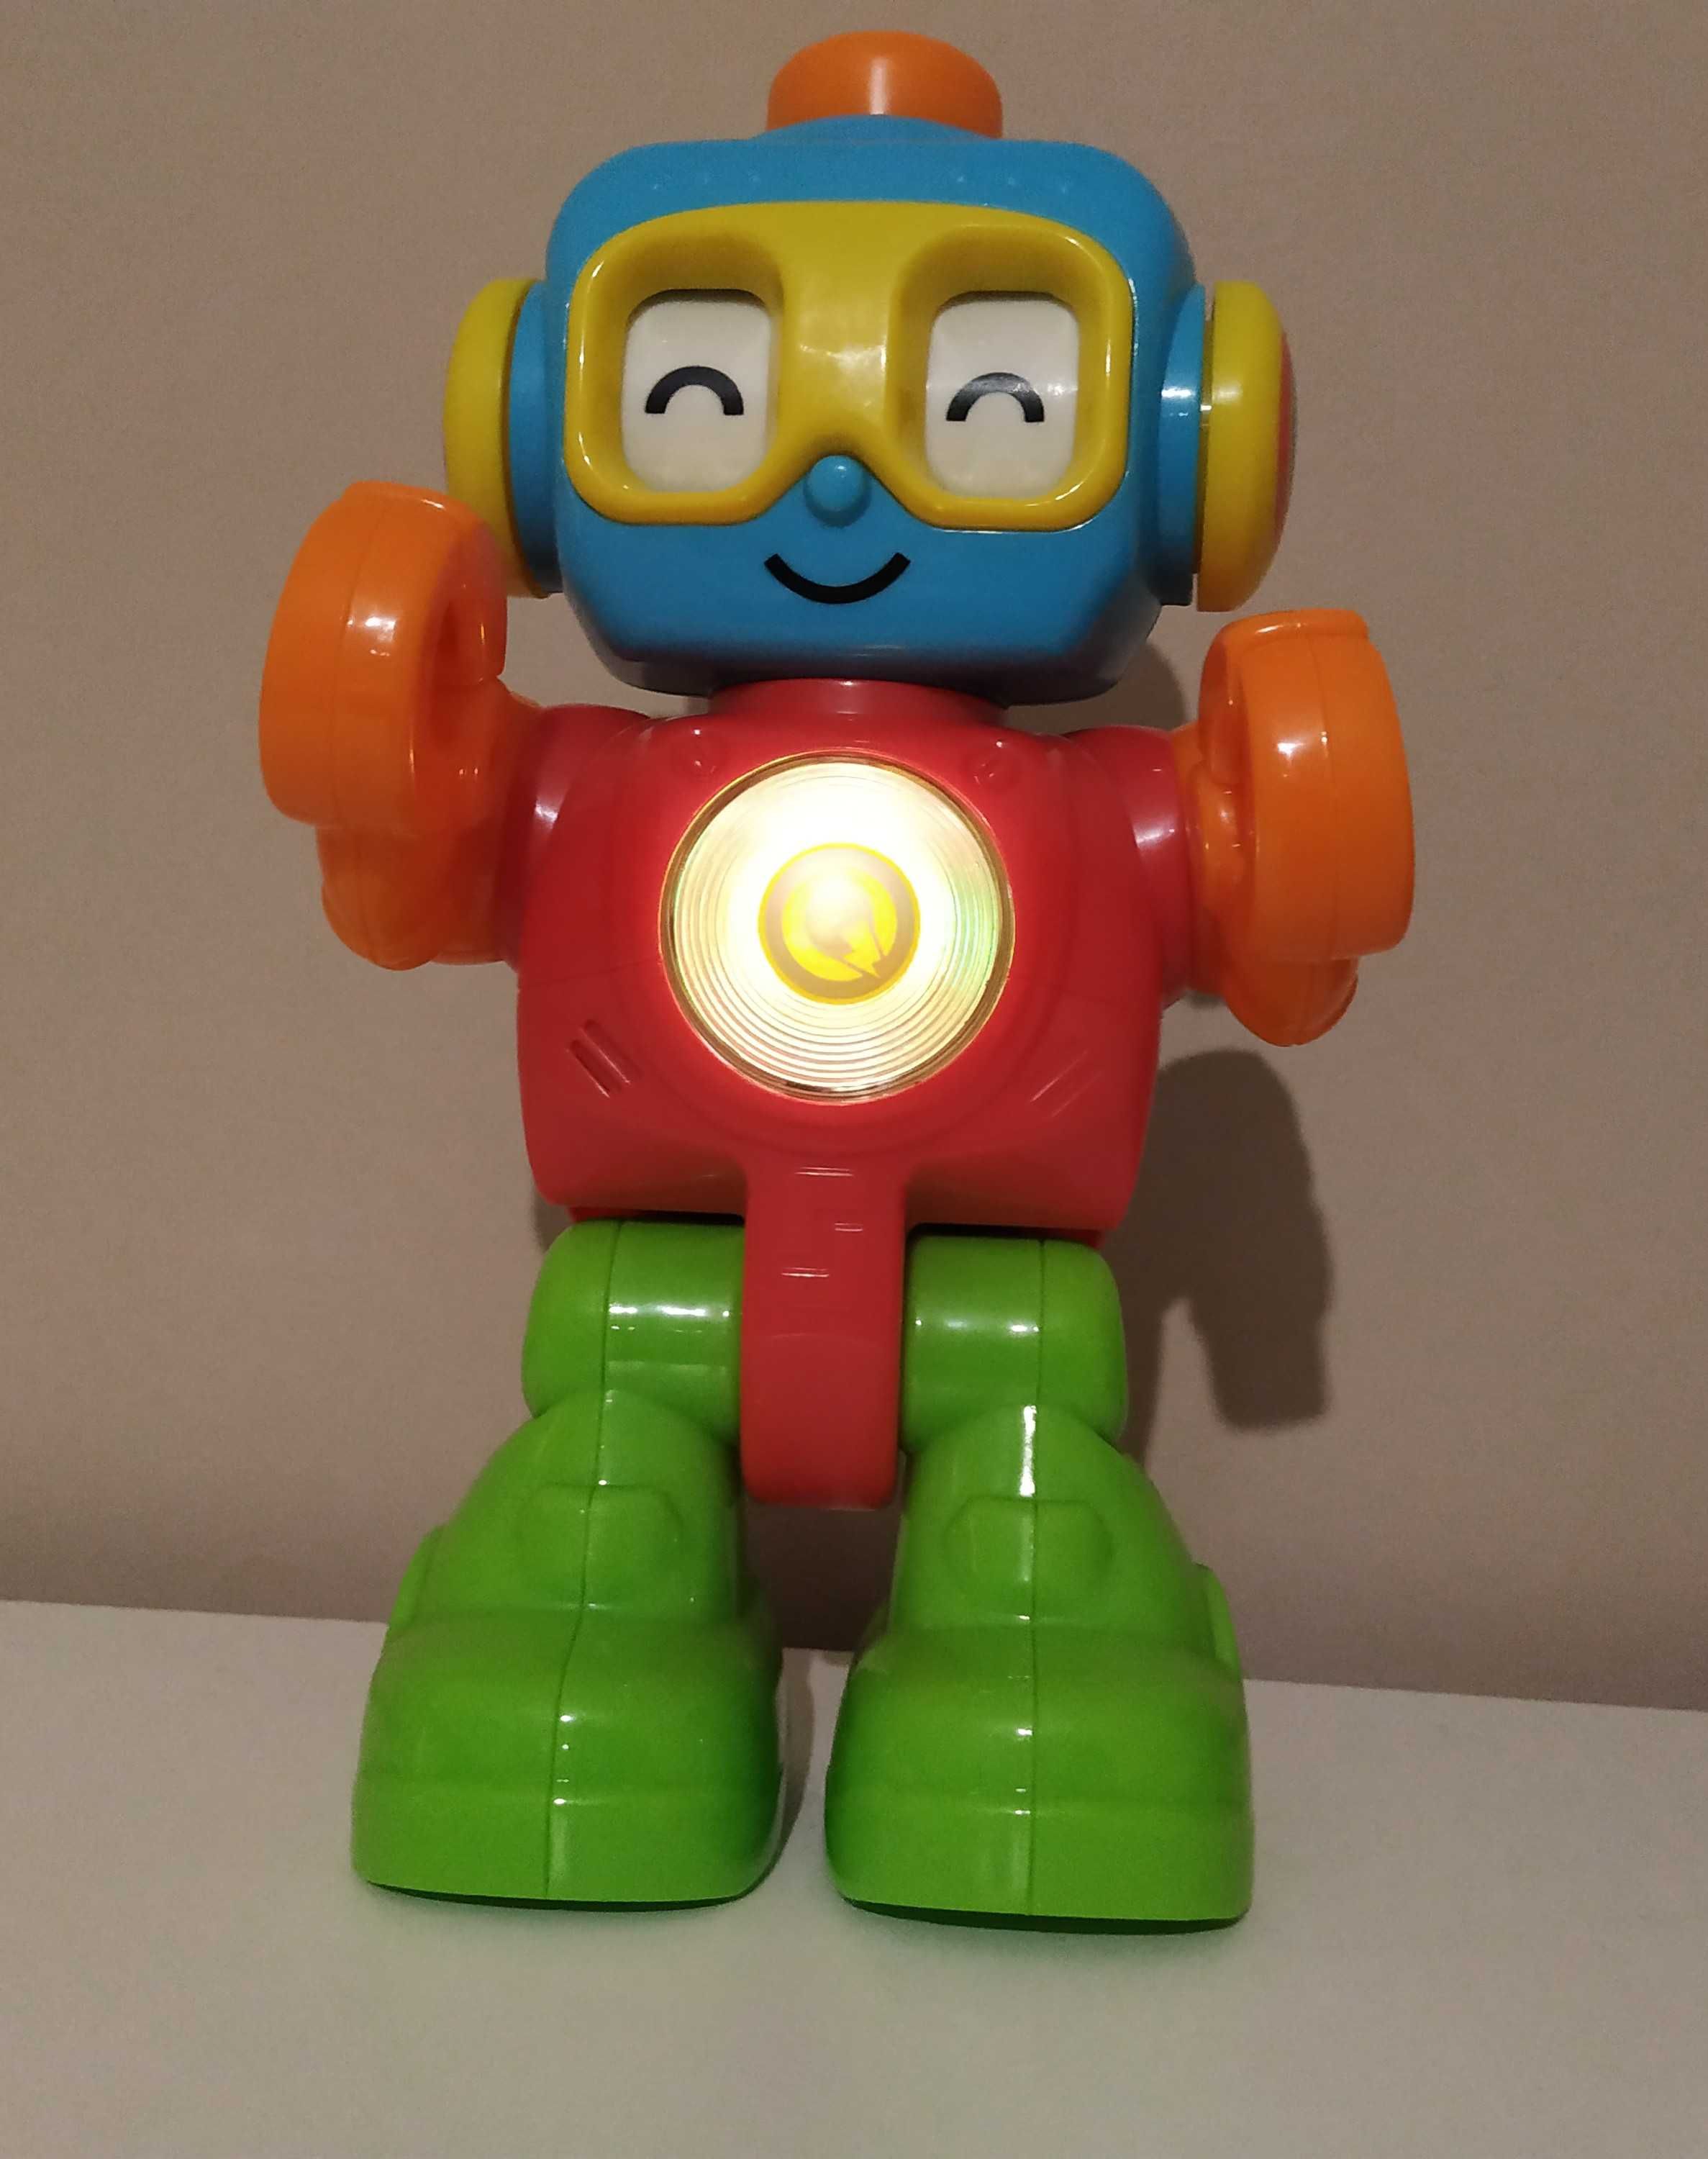 Robot de jucărie PlayGo